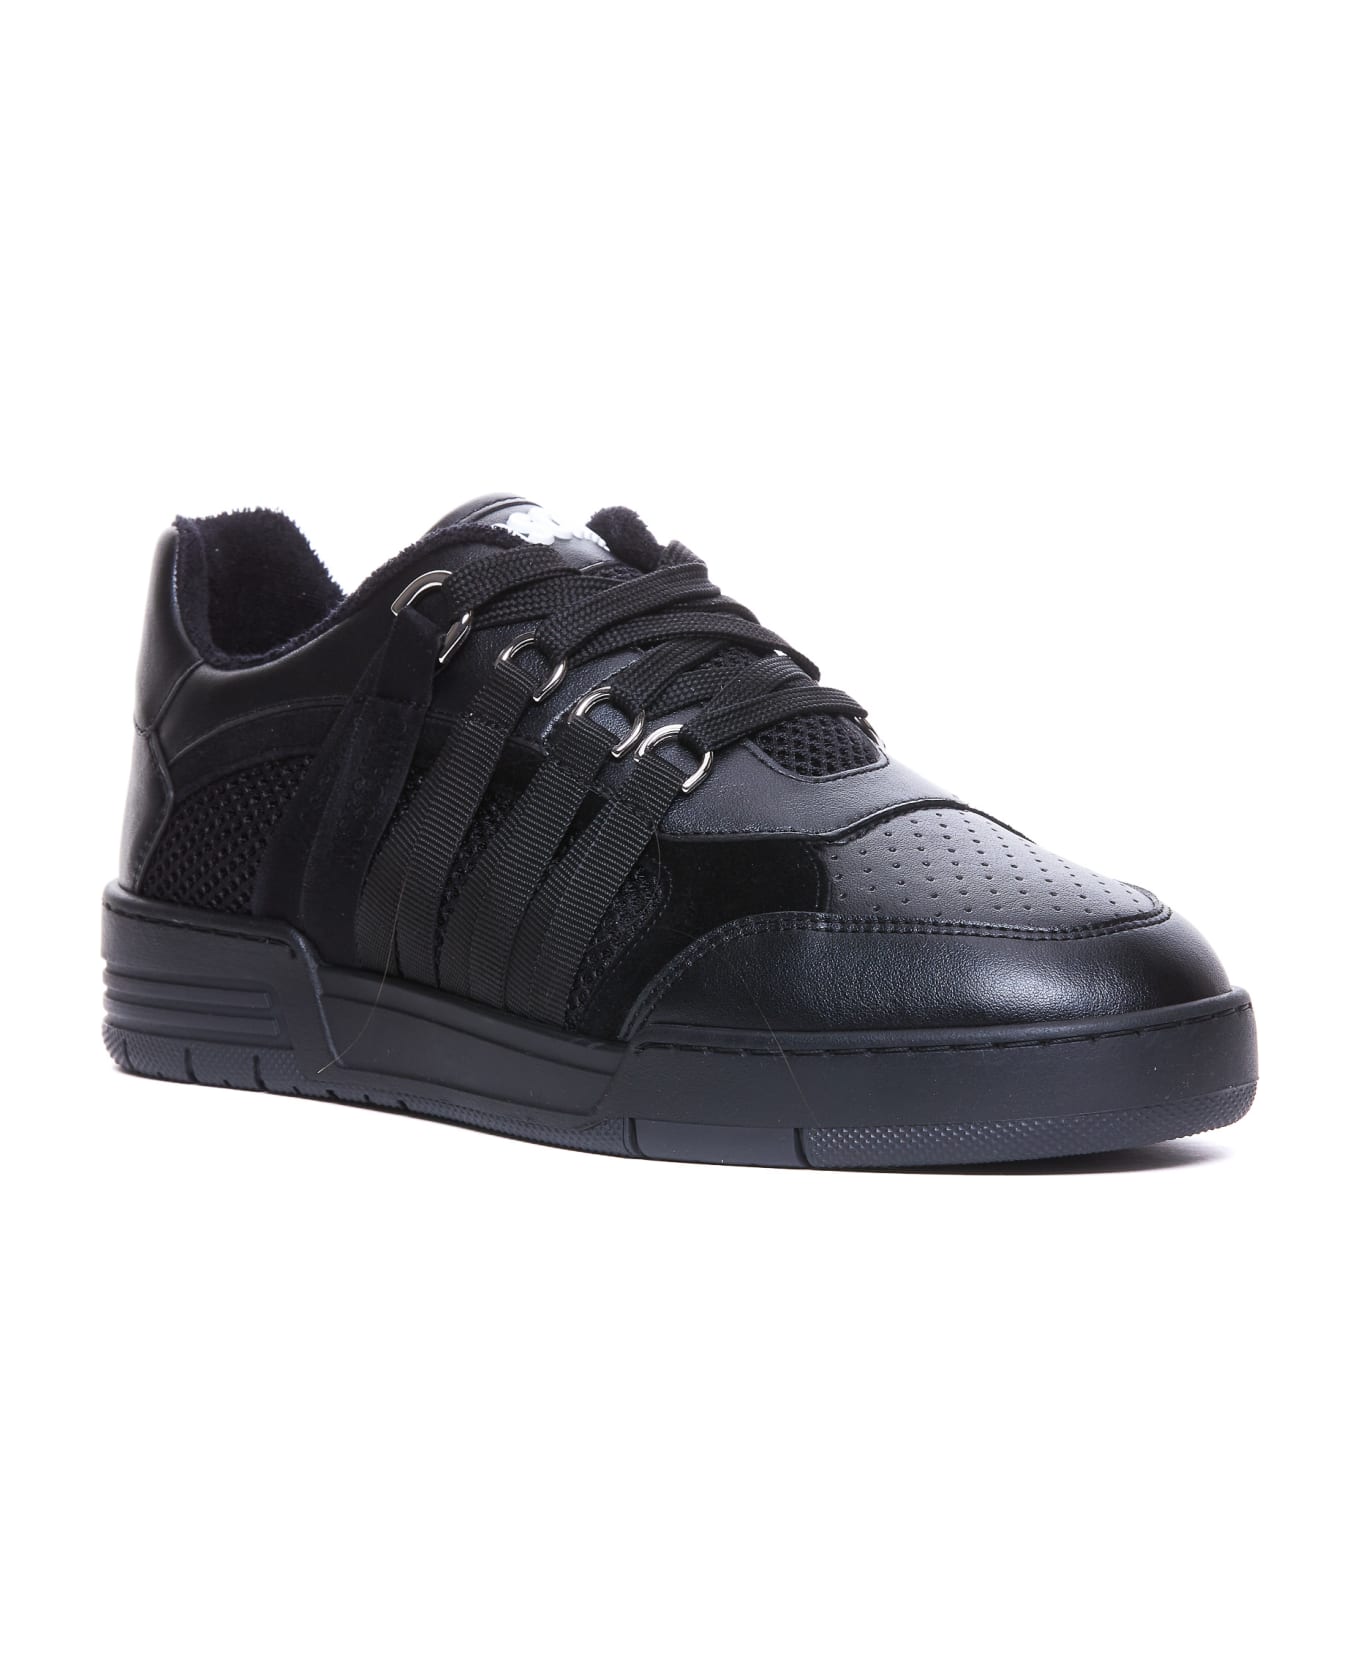 Moschino Streetball Sneakers - Black